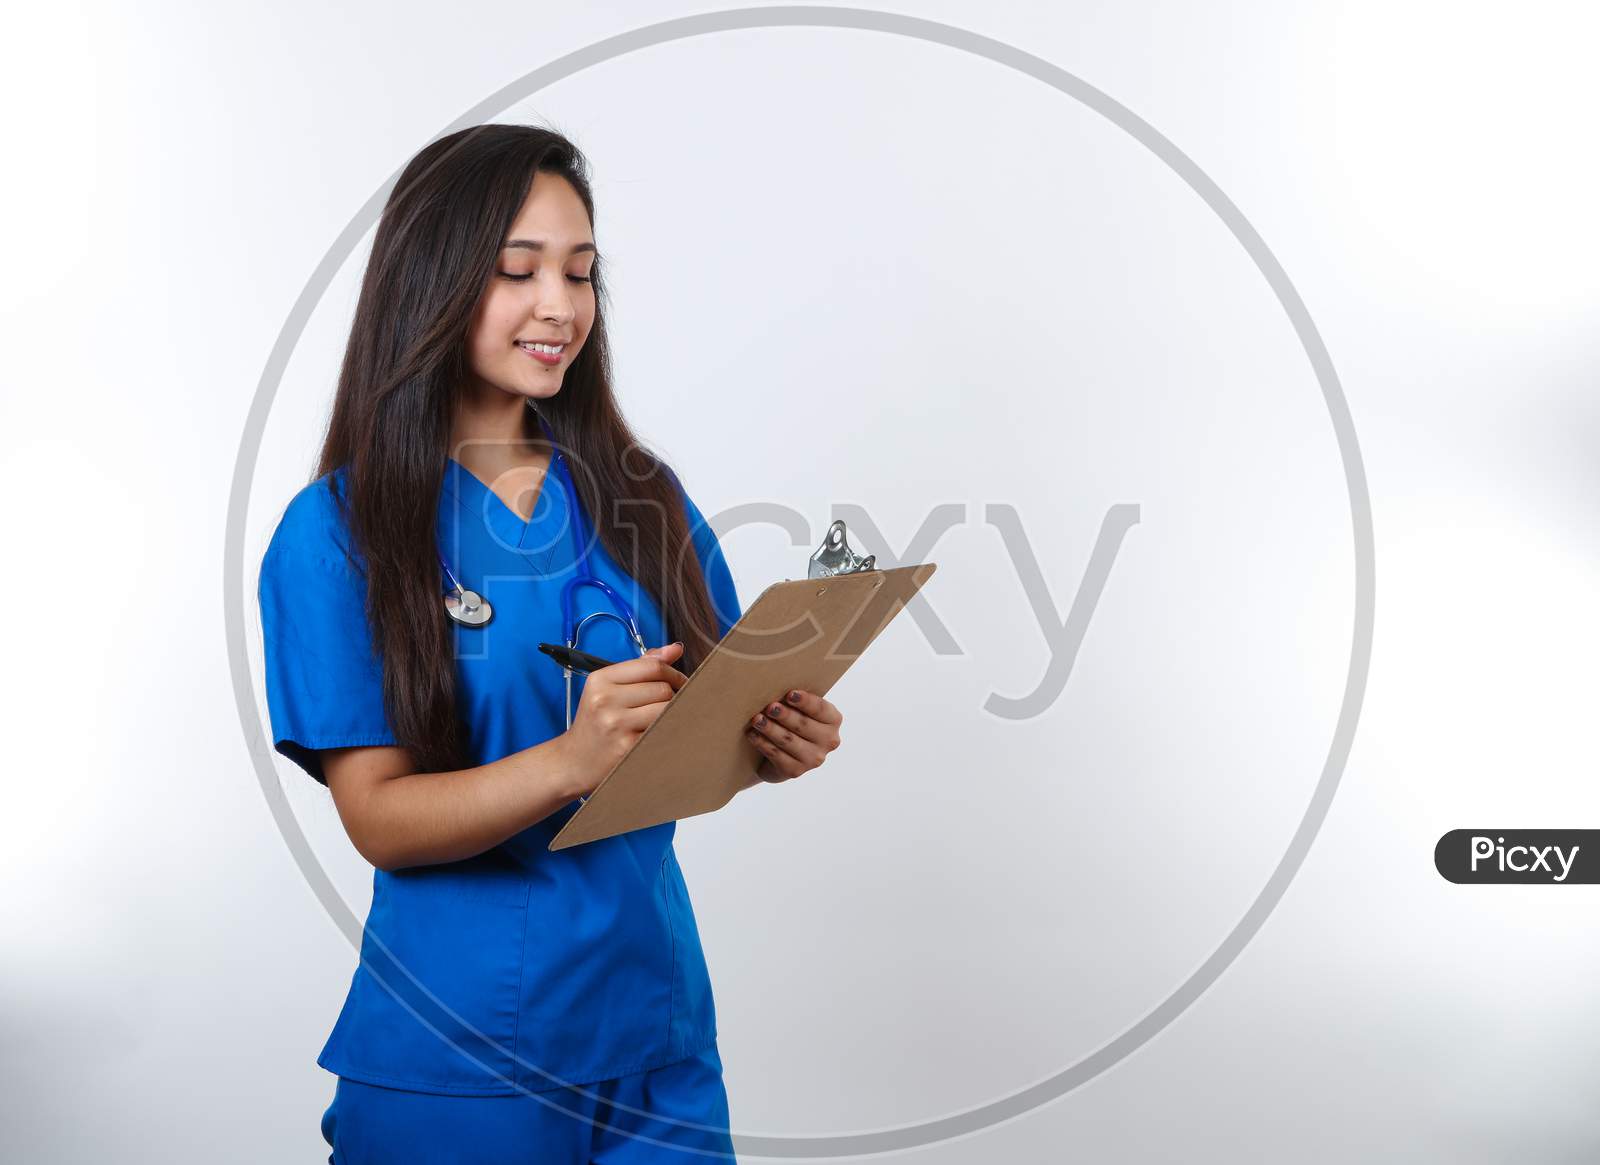 A Pretty Nurse In Blue Scrubs Writes Notes On Her Clip Board.